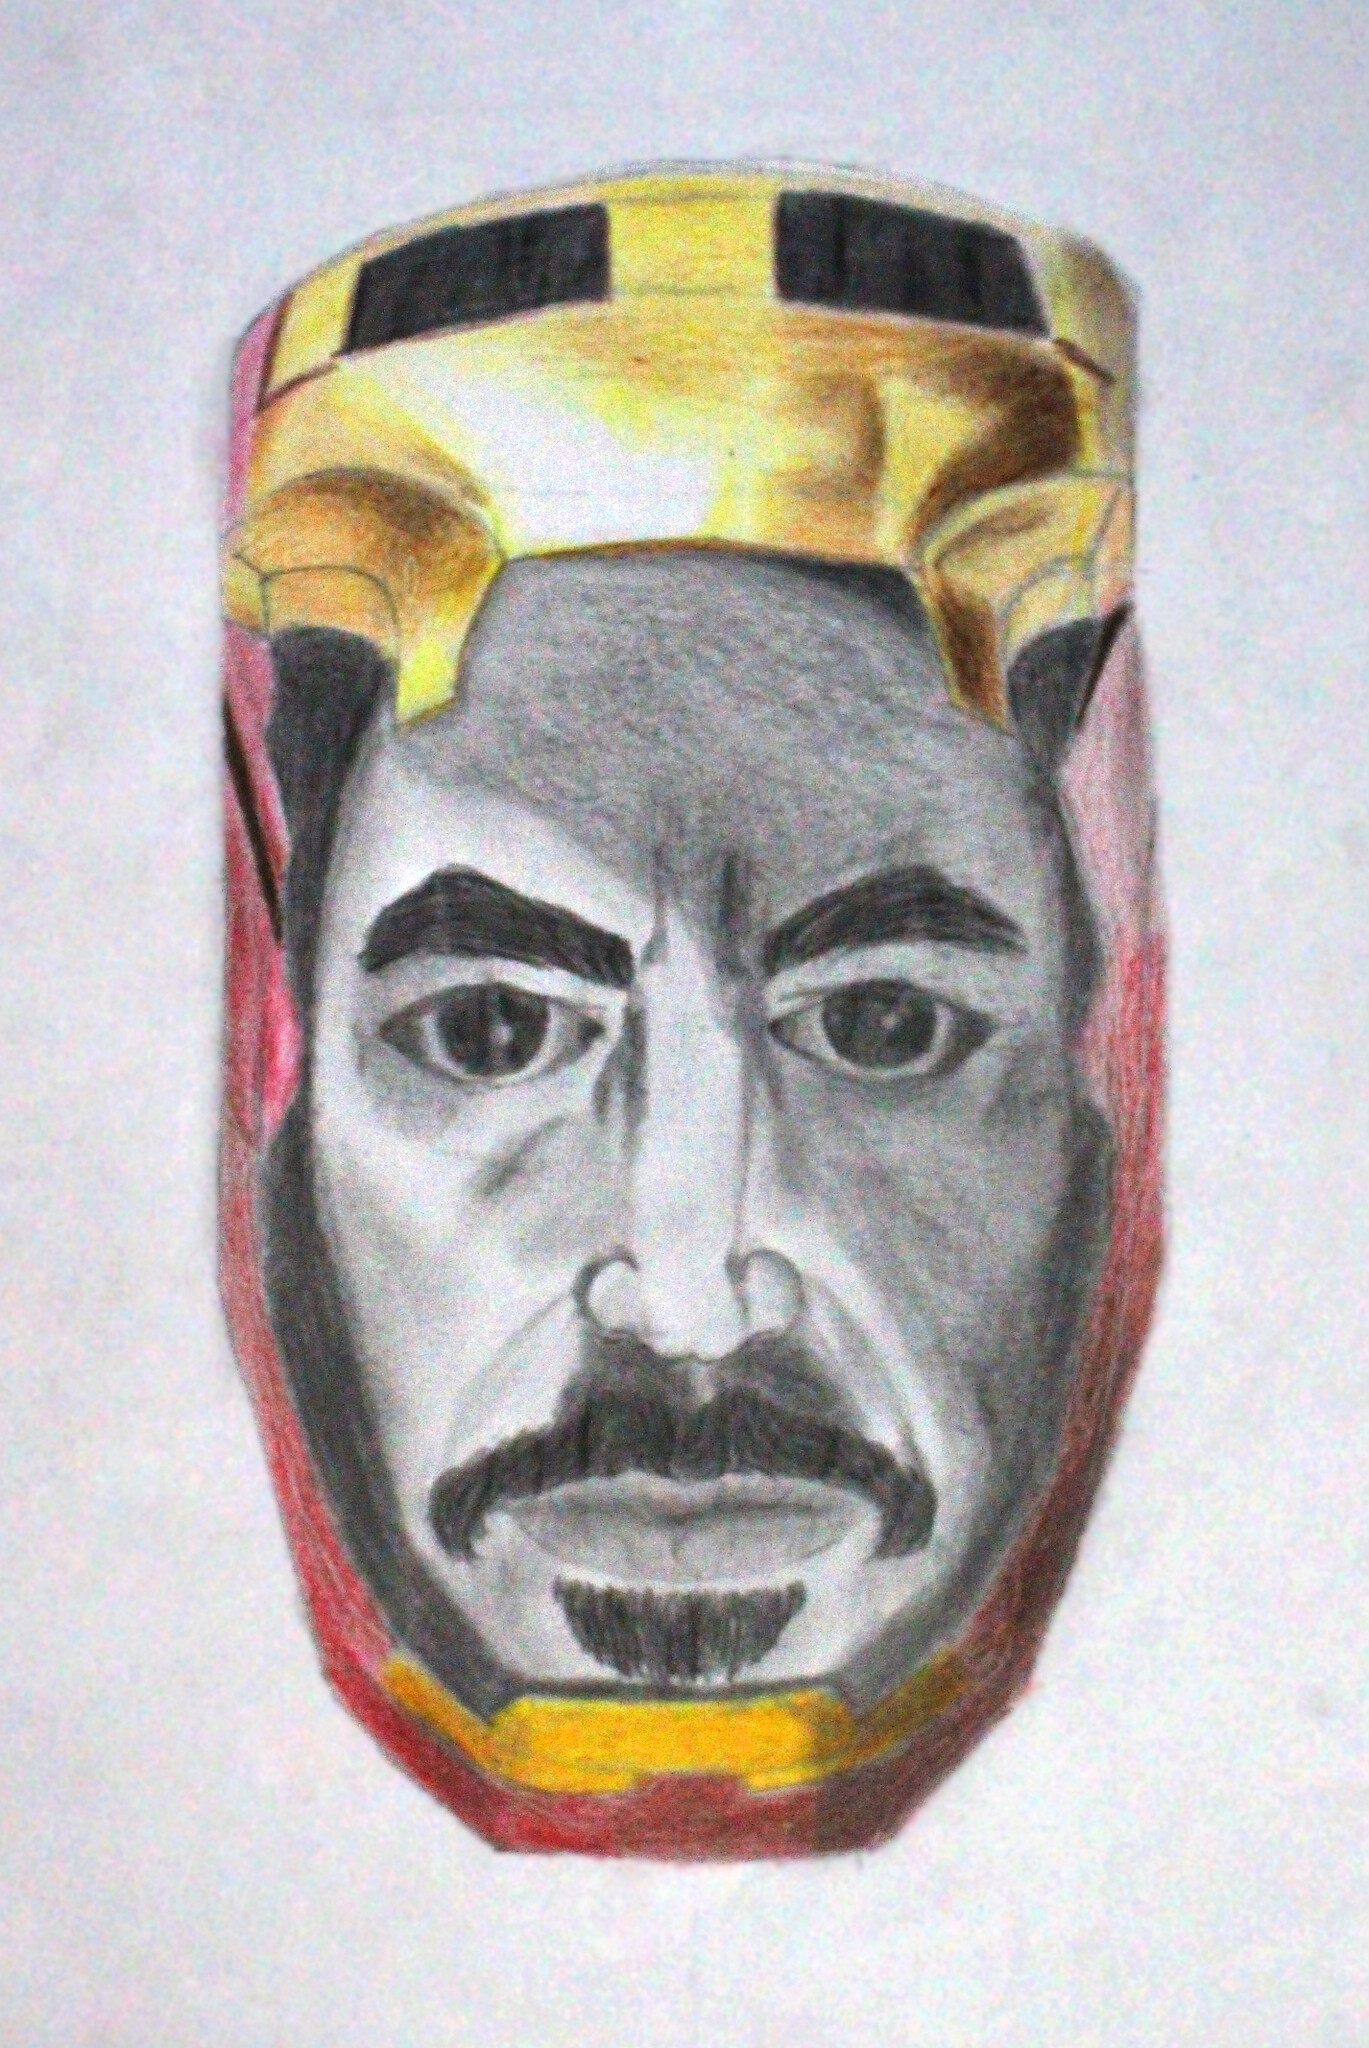 Amazon.com: Marvel Iron Man Face Wood Stamp : Arts, Crafts & Sewing